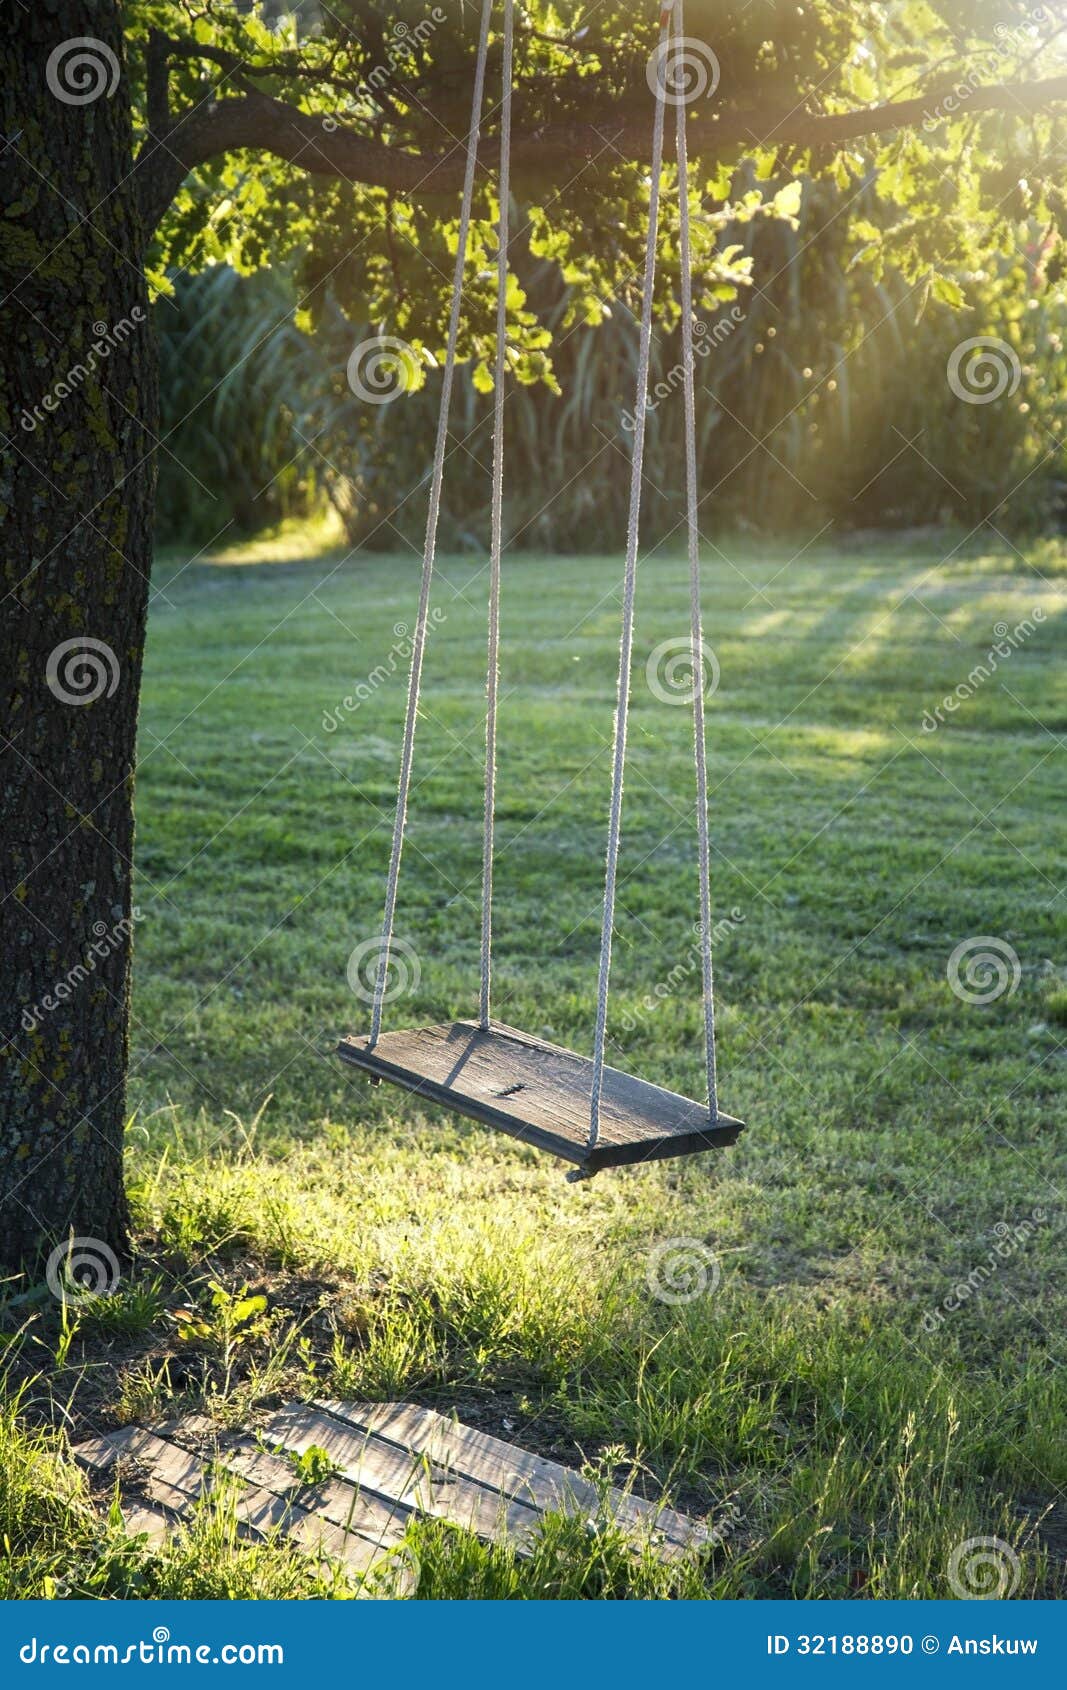 wooden vintage garden swing